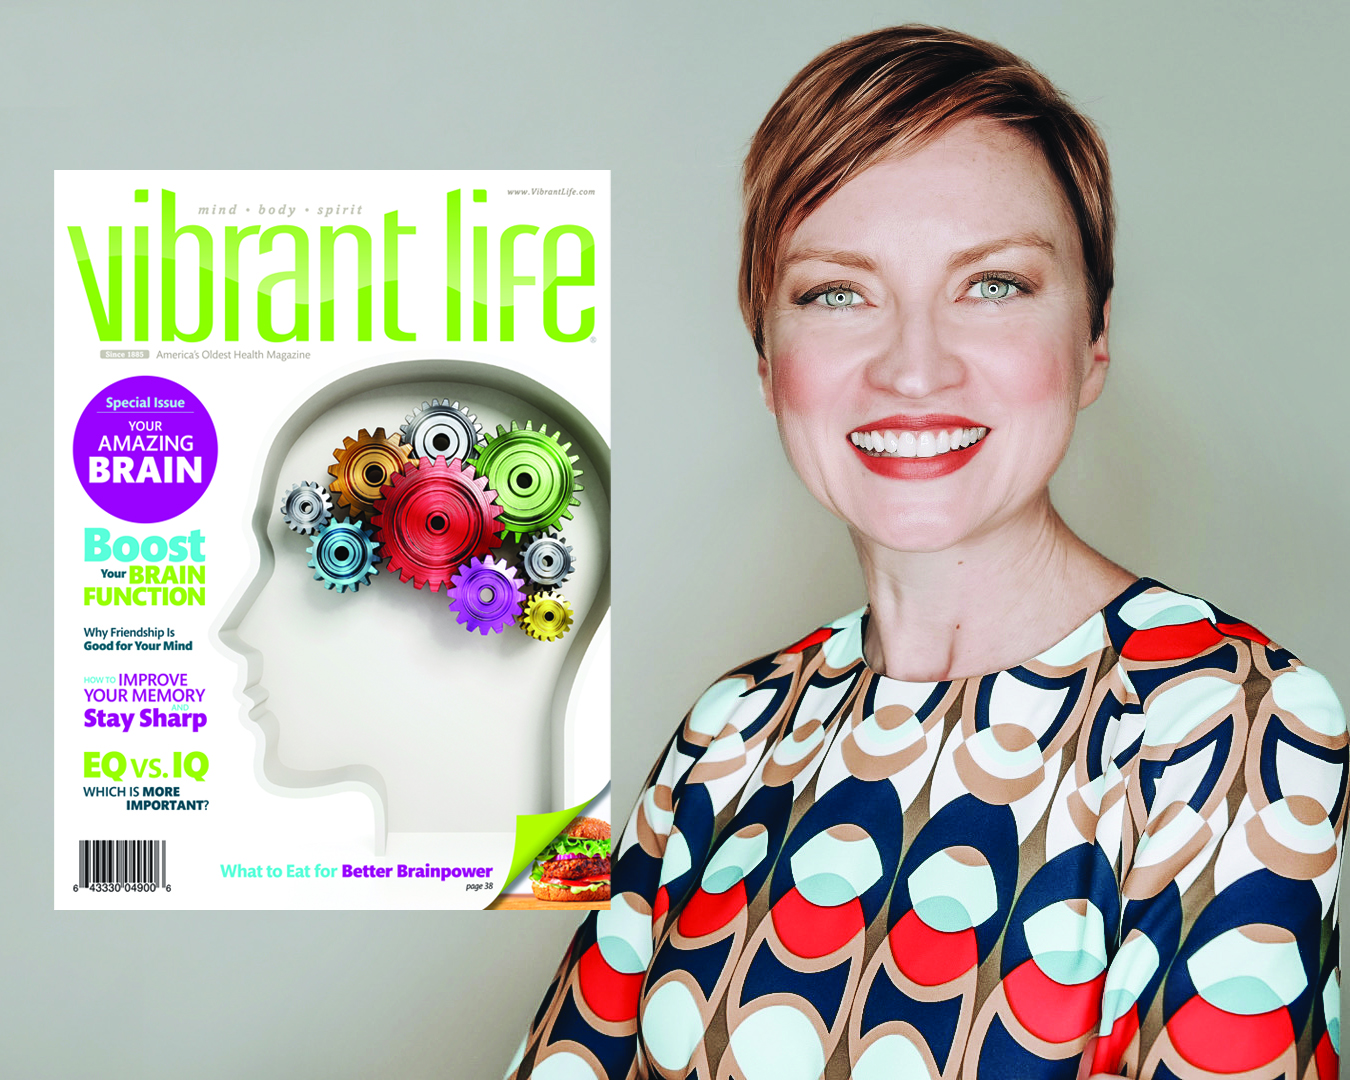 Vibrant Life editor Heather Quintana and copy of Vibrant Life magazine